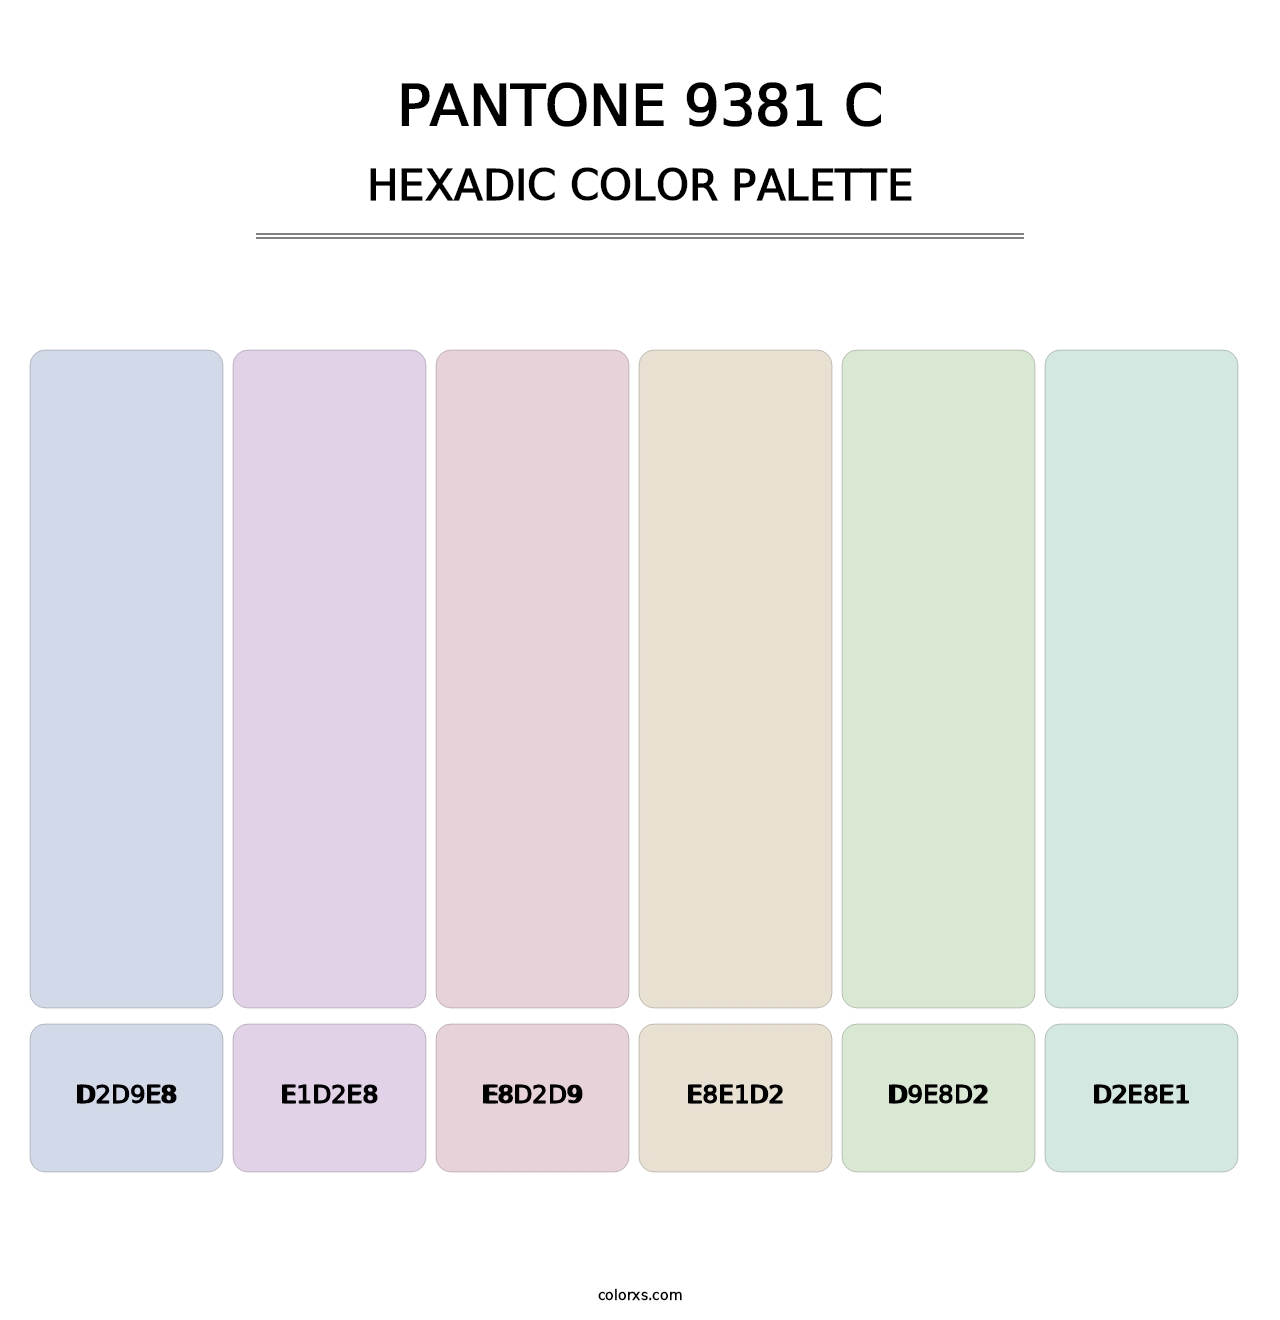 PANTONE 9381 C - Hexadic Color Palette